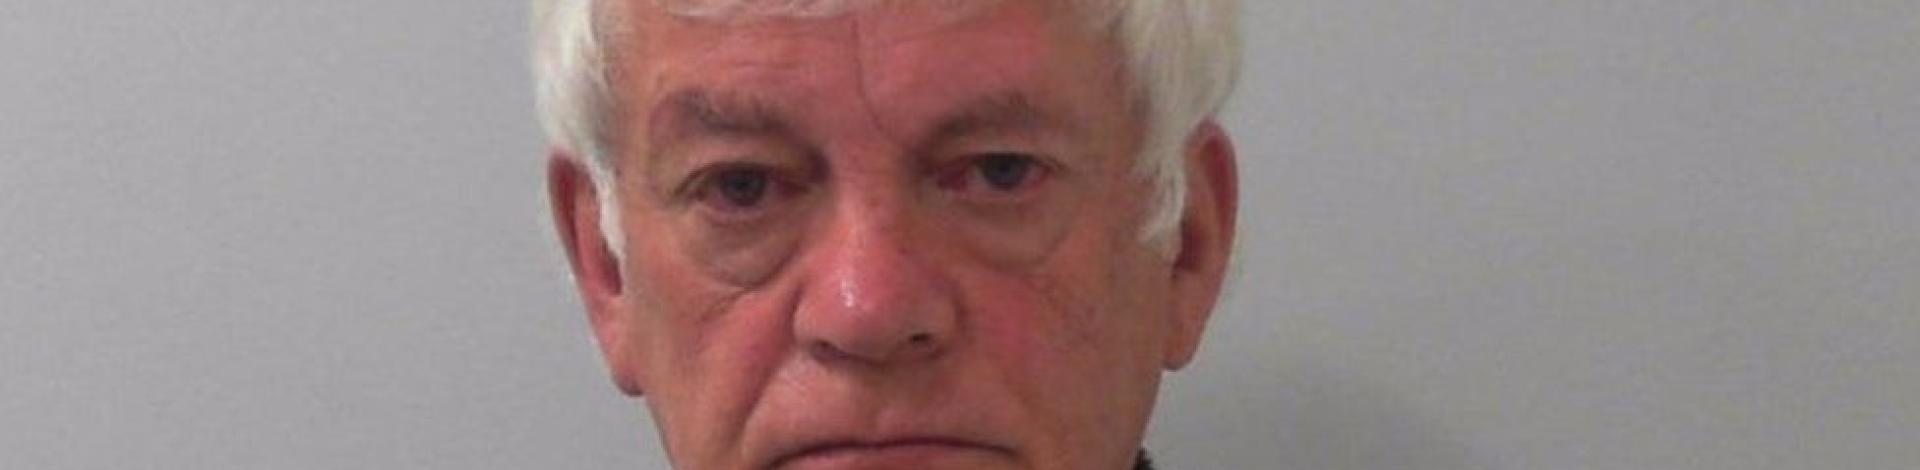 Dangerous Sex Offender Former Vicar Receives Four Year Prison